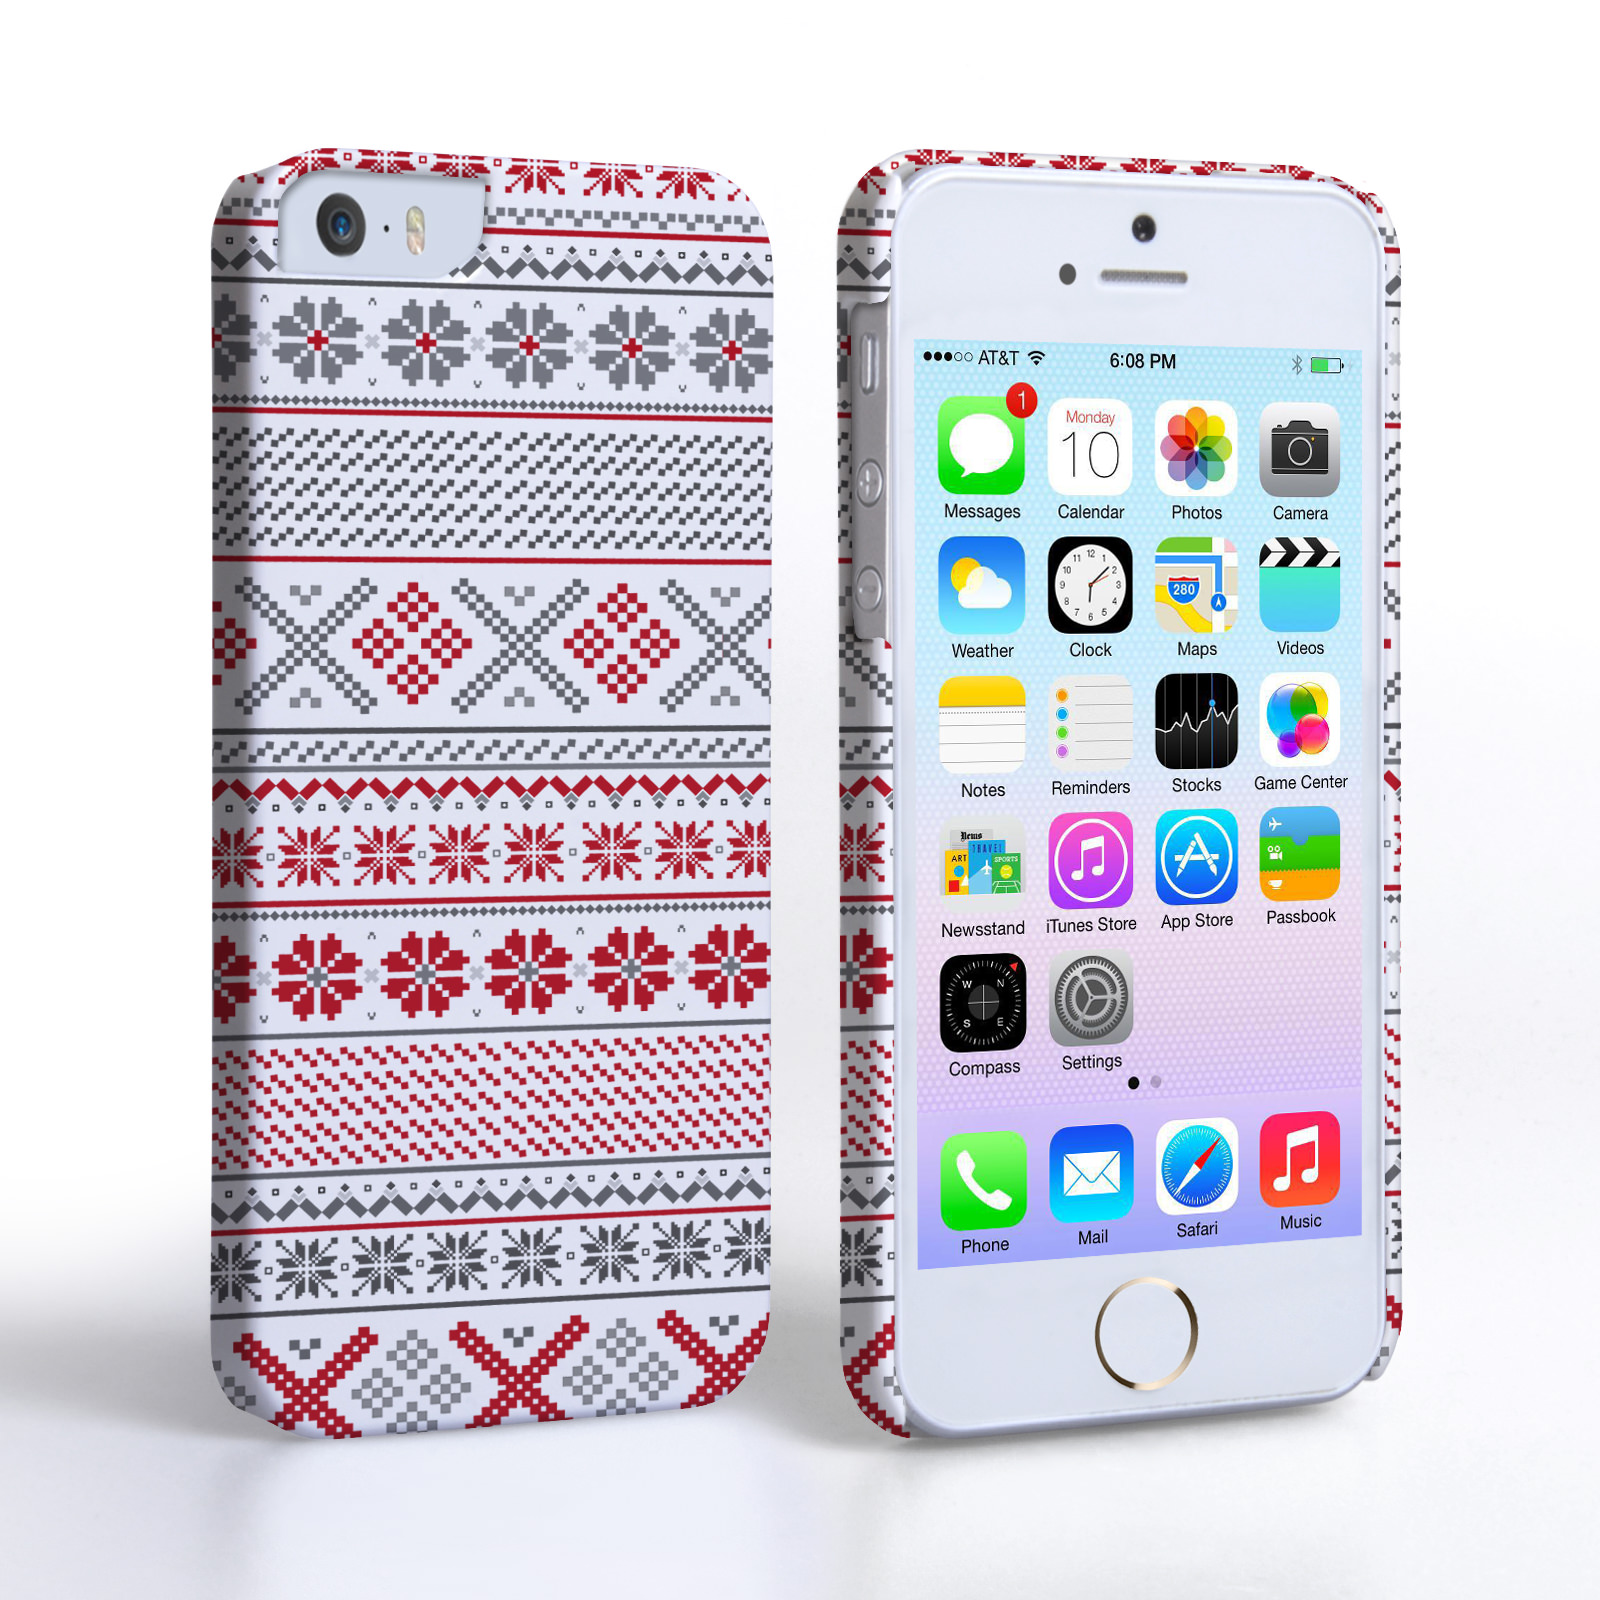 Caseflex iPhone SE Fairisle Case – Red, White and Grey